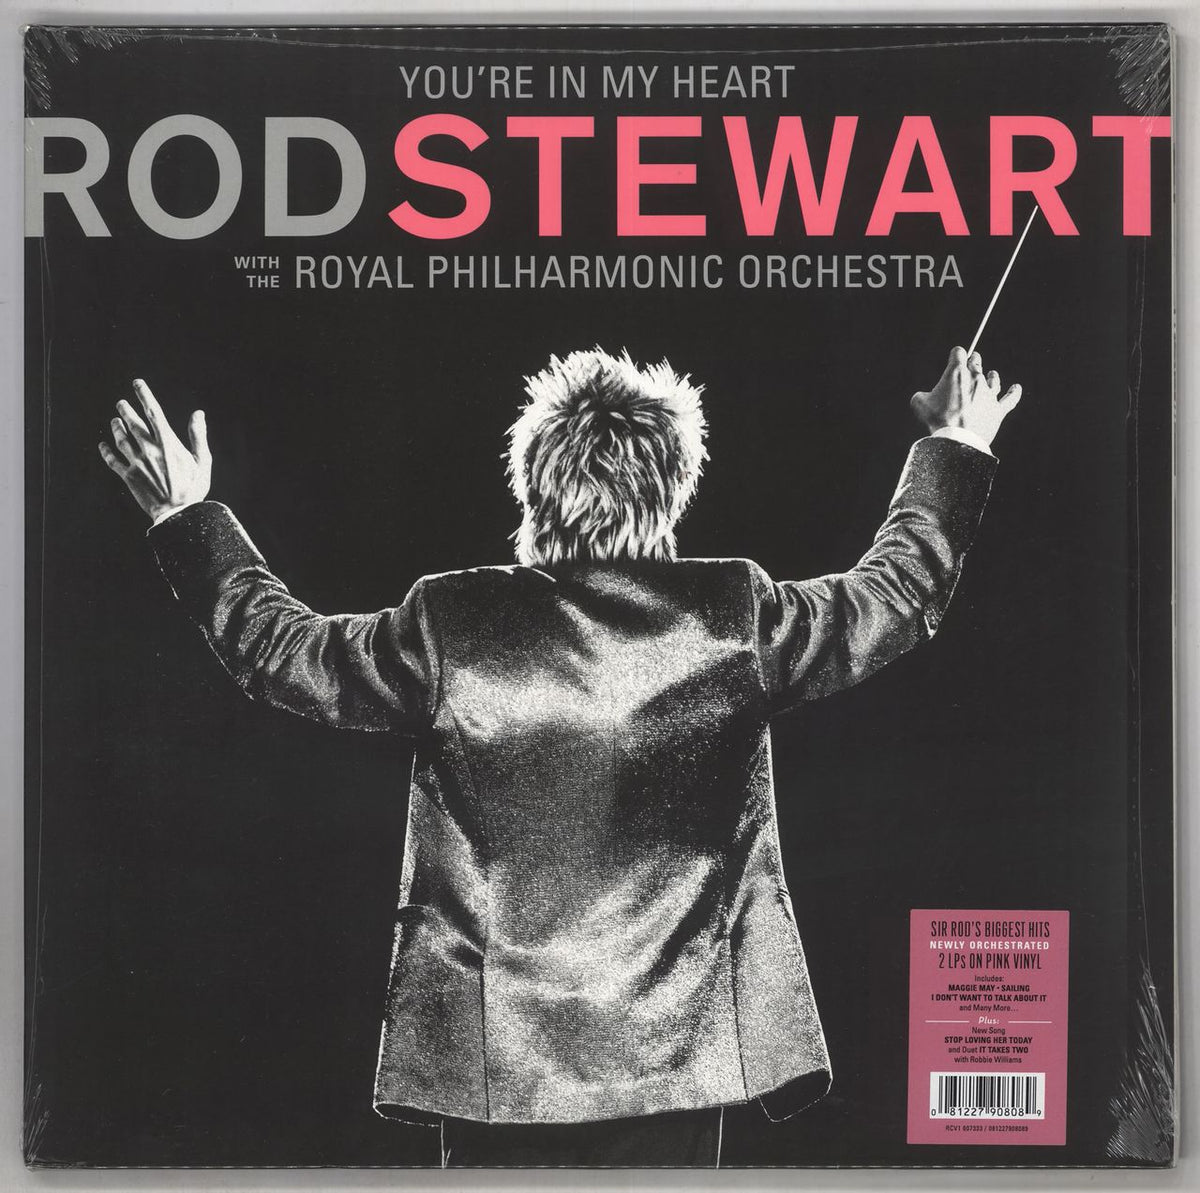 Rod Stewart You're In My Heart - 180gm Pink Vinyl - Sealed UK 2-LP vinyl set